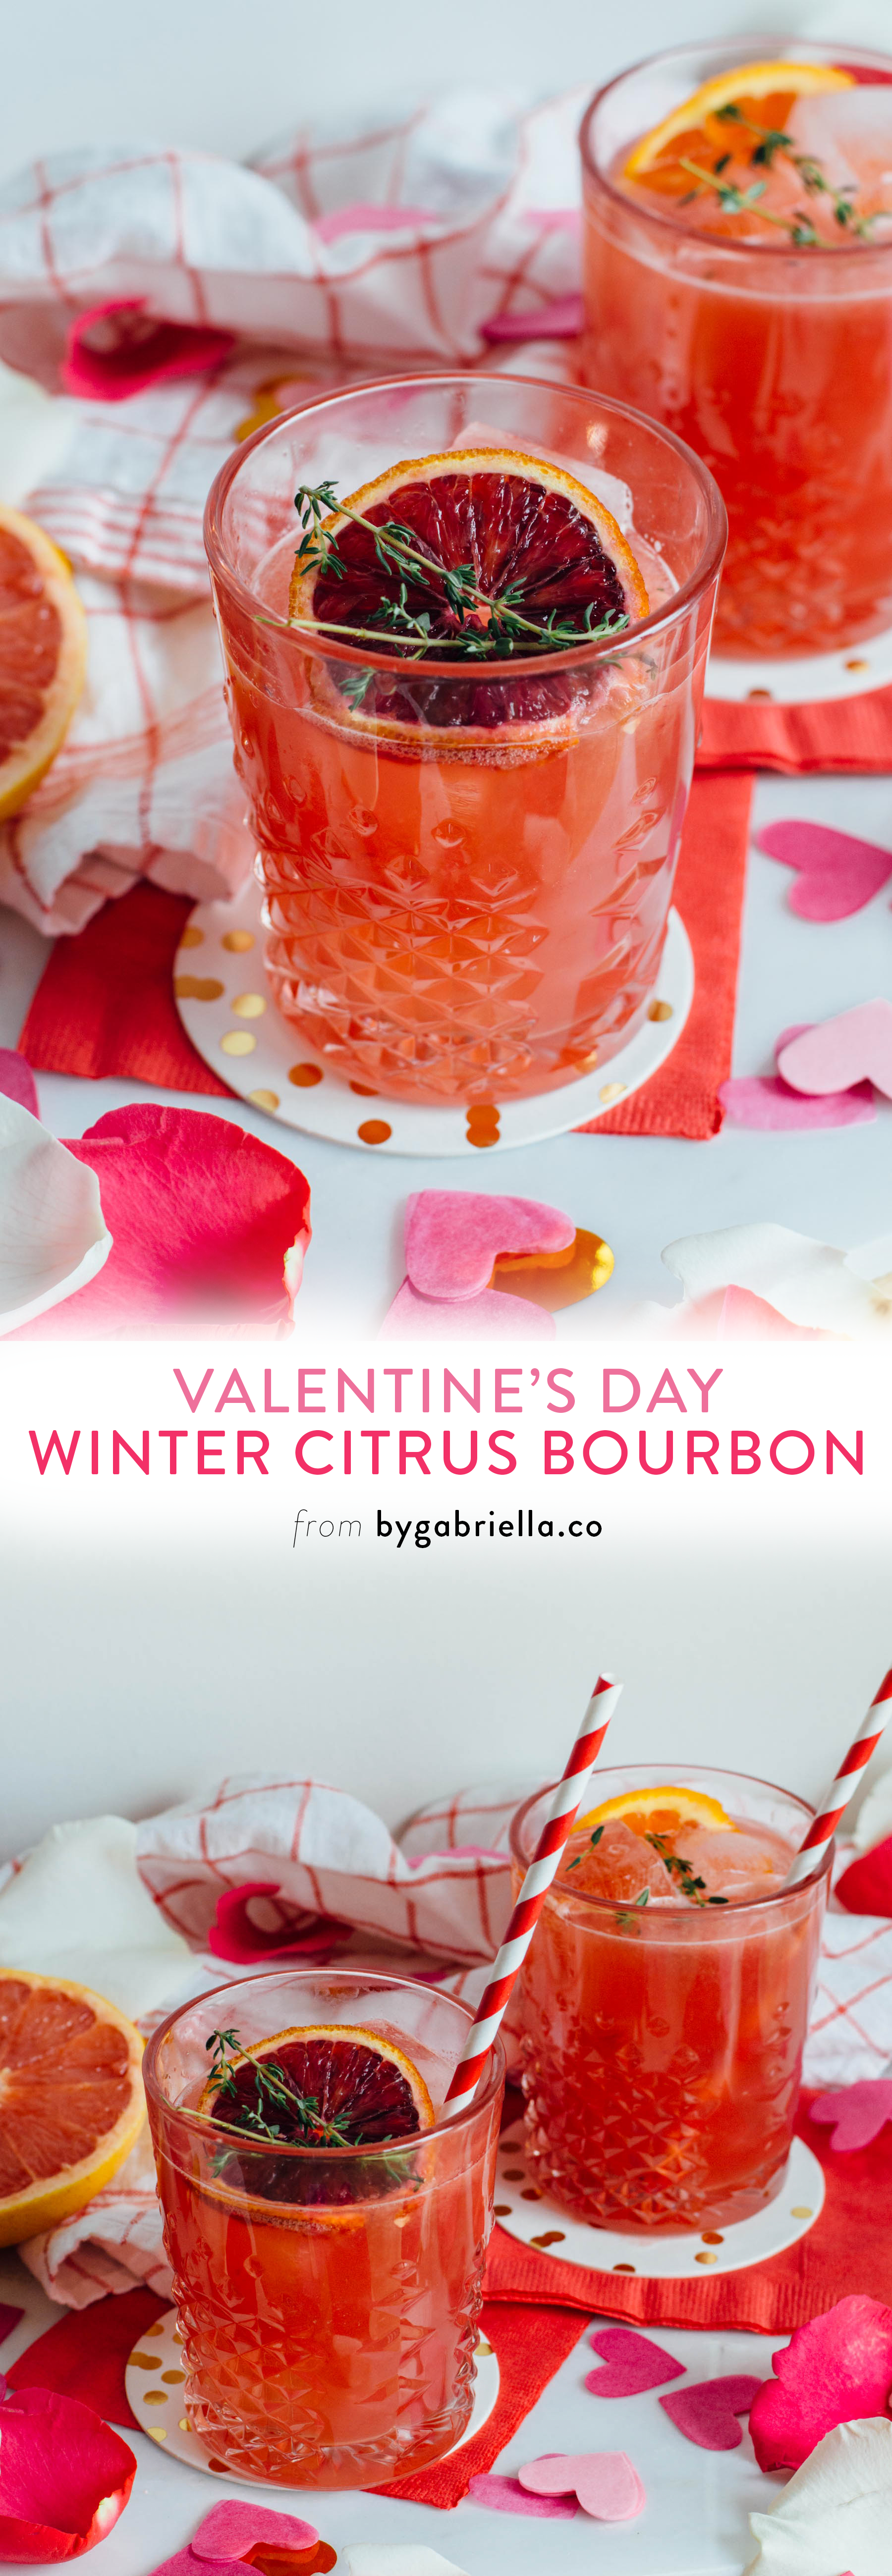 Valentine's Day Cocktail Recipe: The Winter Citrus Bourbon - a tasty blend of citrus juice, honey, bourbon, and more. | bygabriella.co